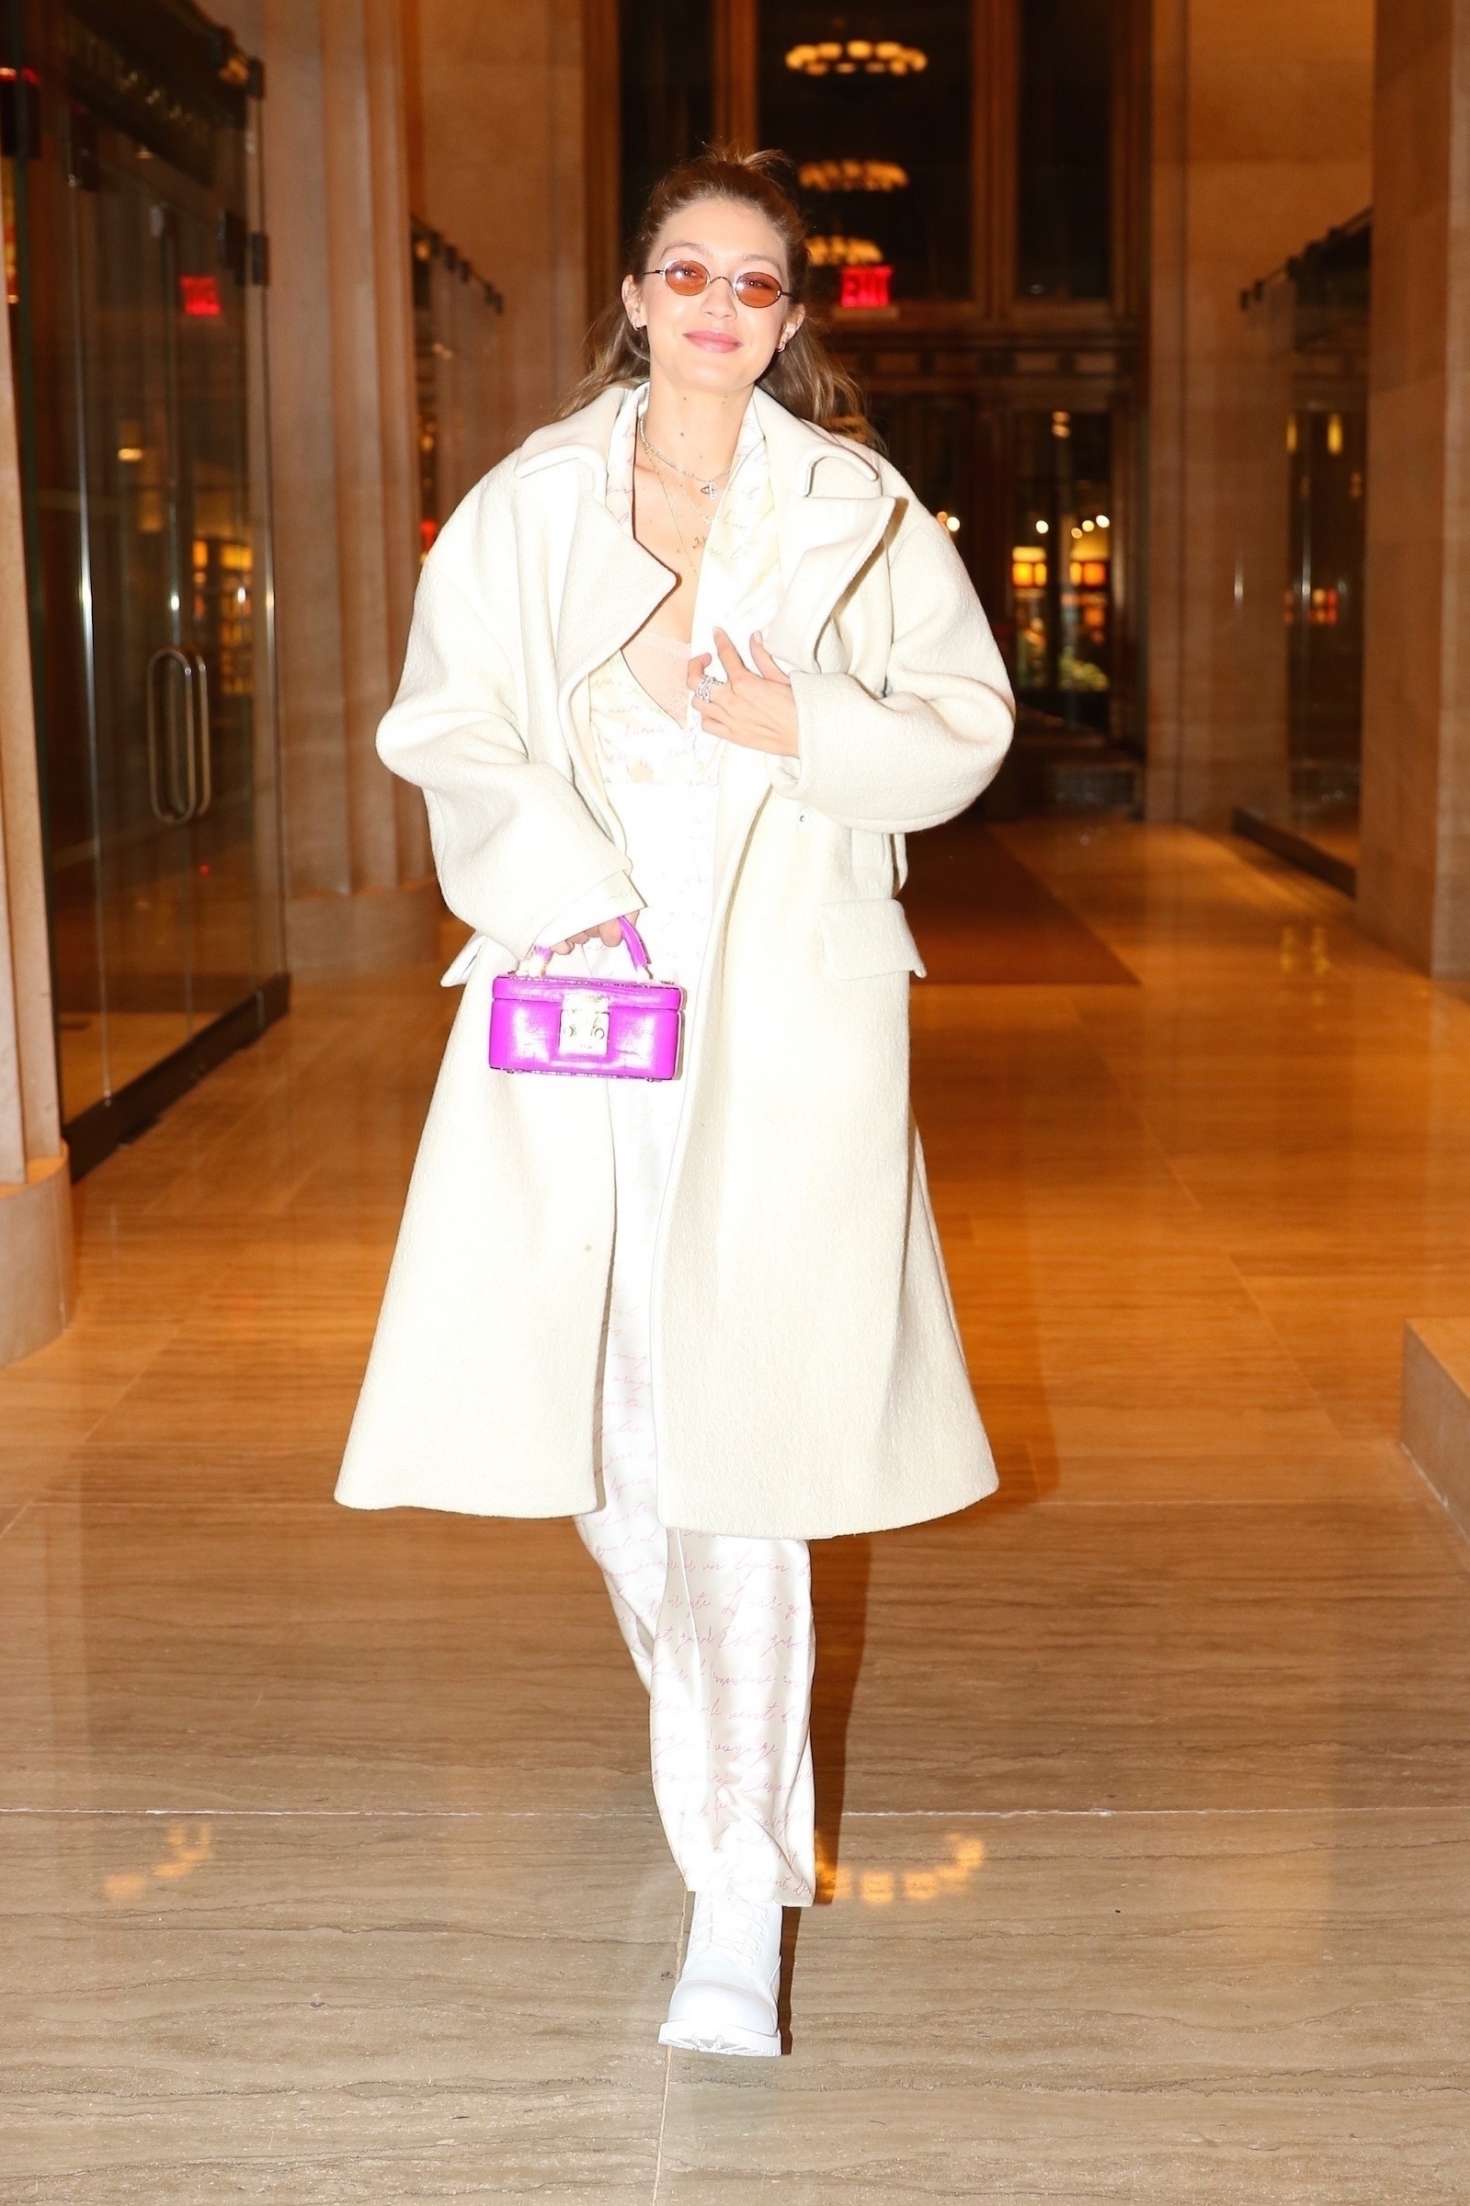 Gigi Hadid 2018 : Gigi Hadid: Out for dinner in NYC -20